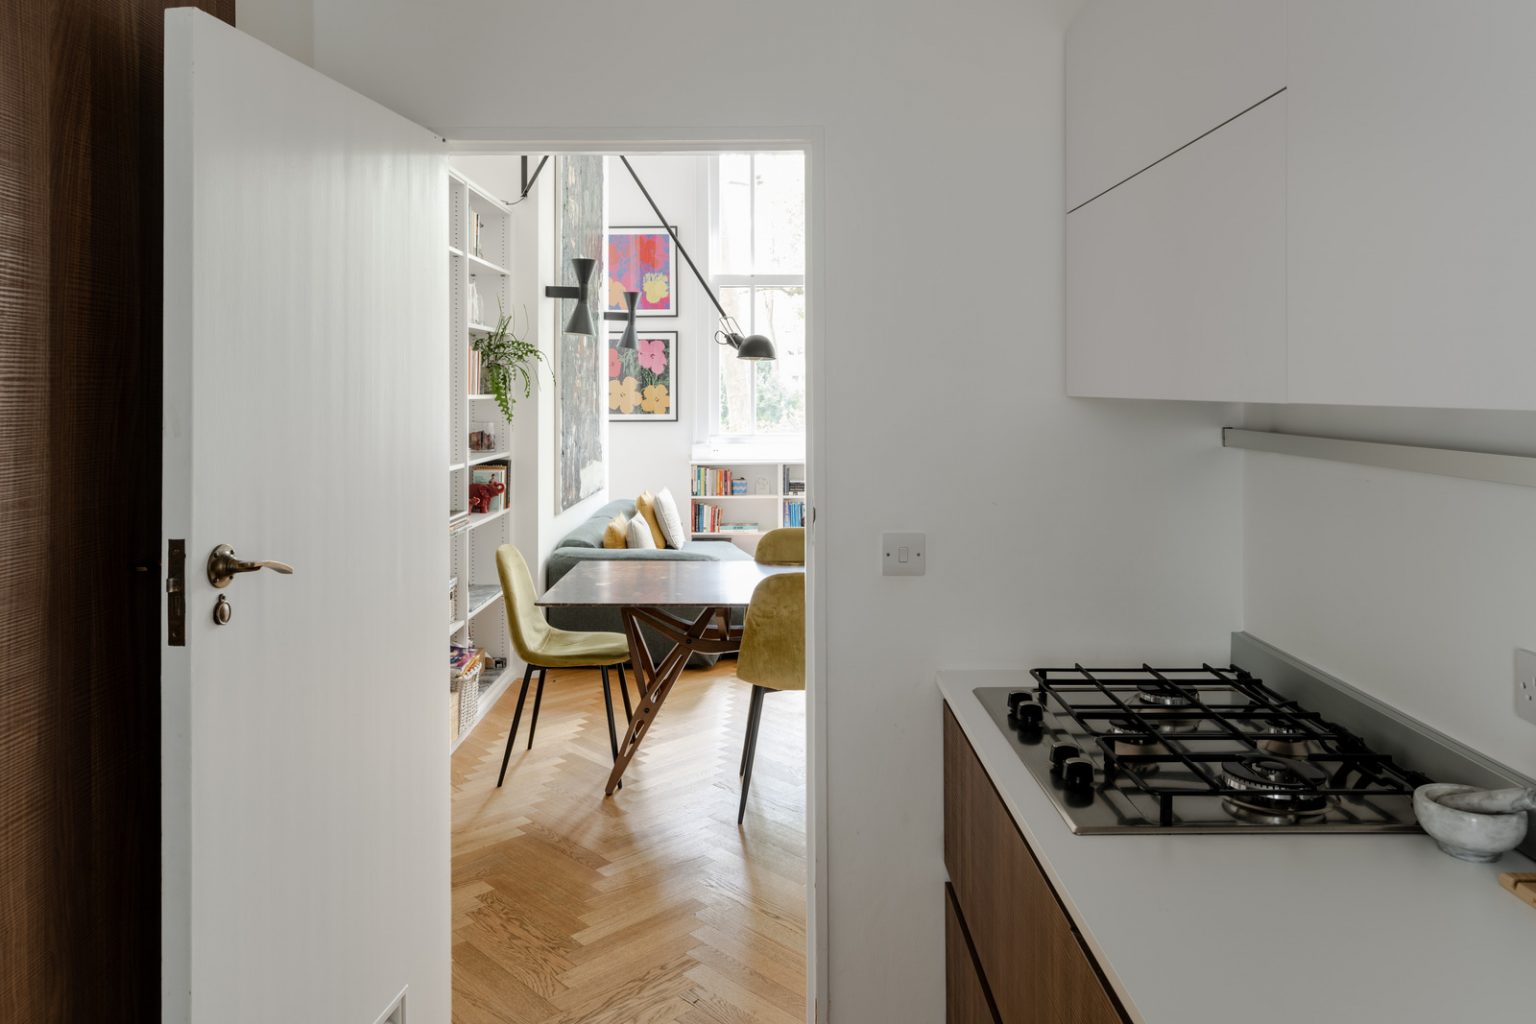 Kitchen apartment modern decor